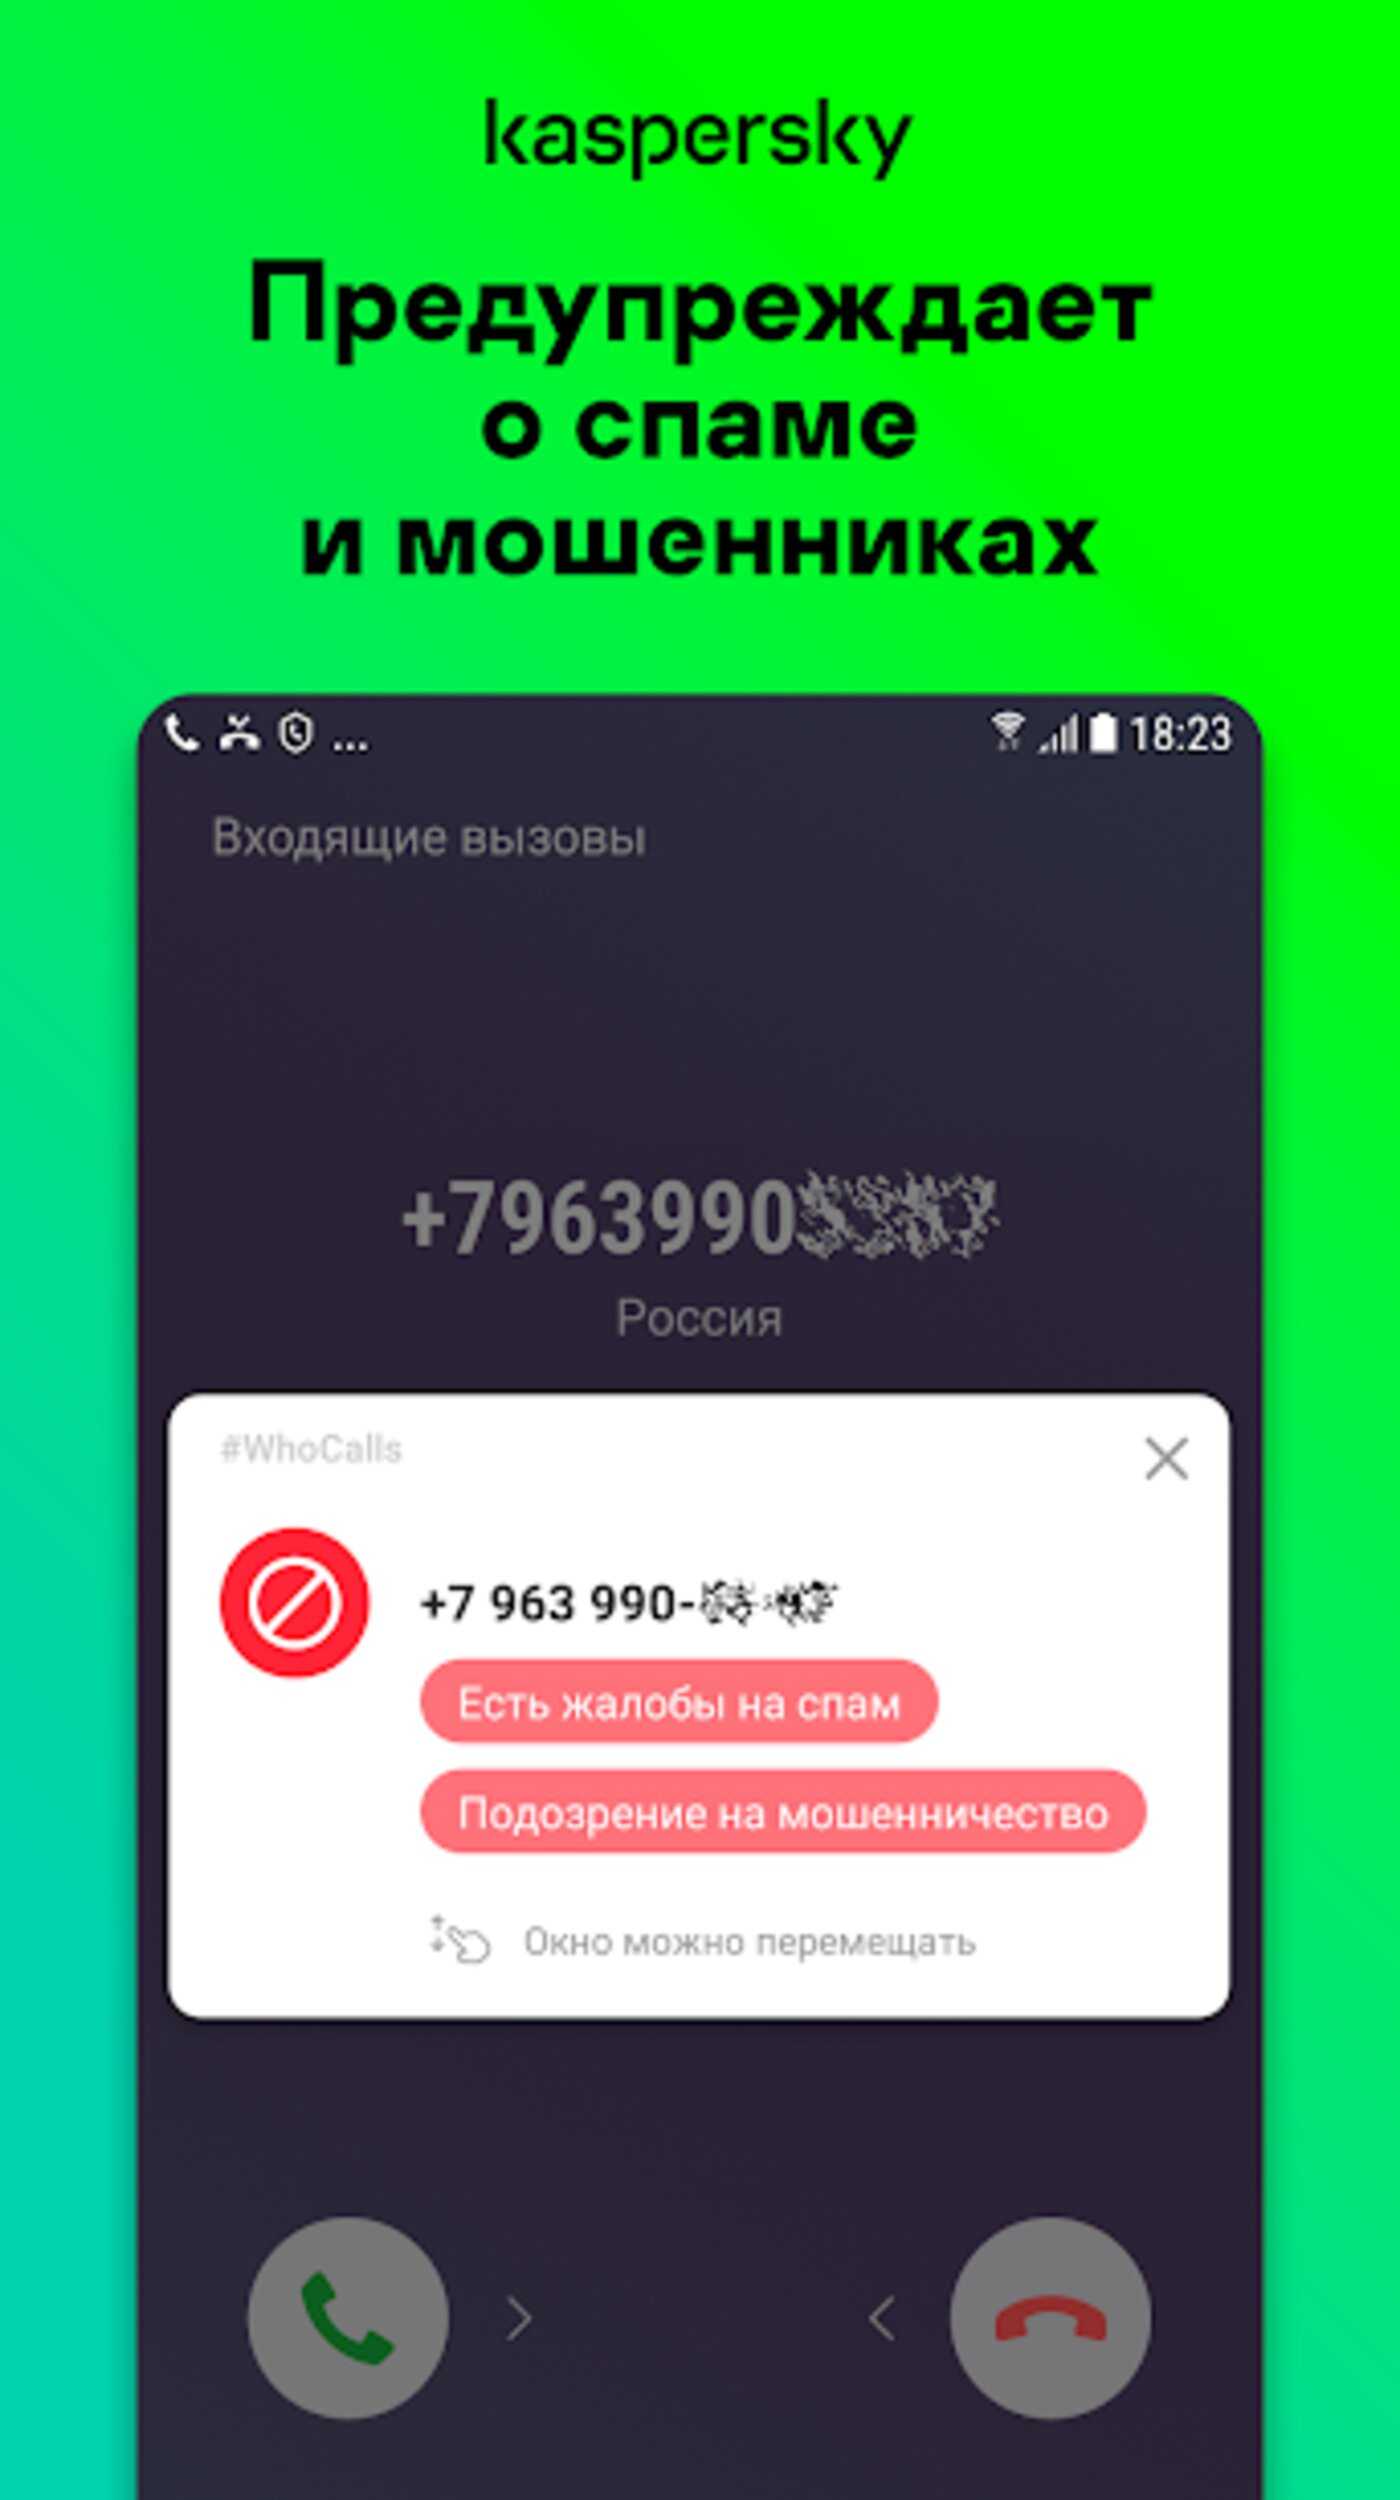 Kaspersky Who Calls v1.24.0.88 (Premium) (Unlocked) APK